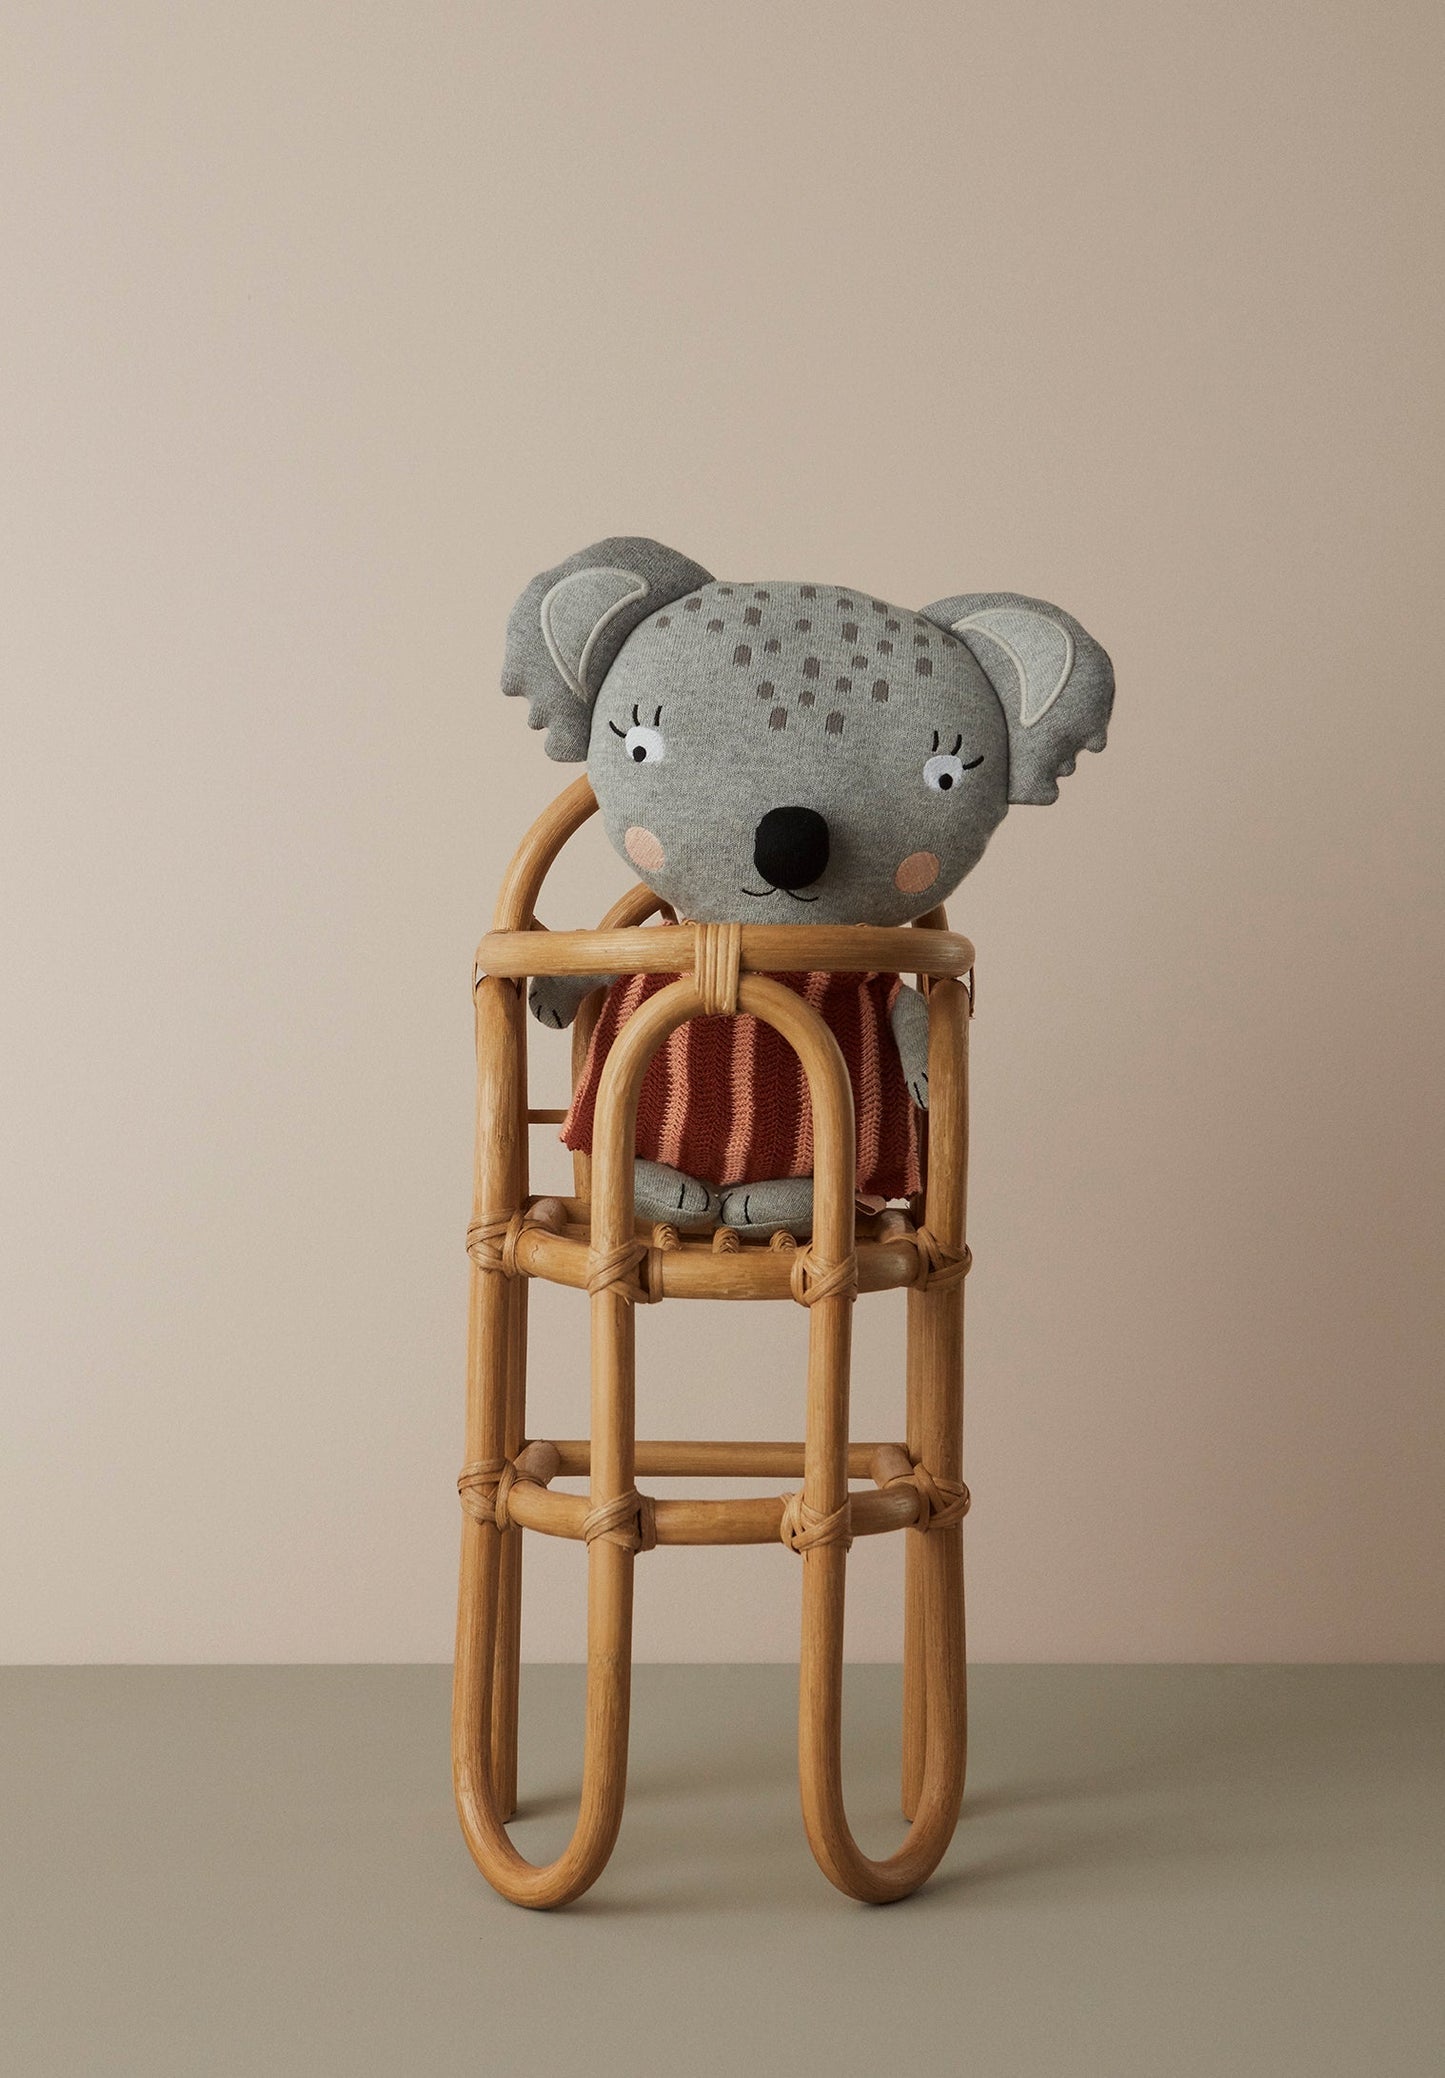 Mami Koala - Multi Soft Toys OYOY 